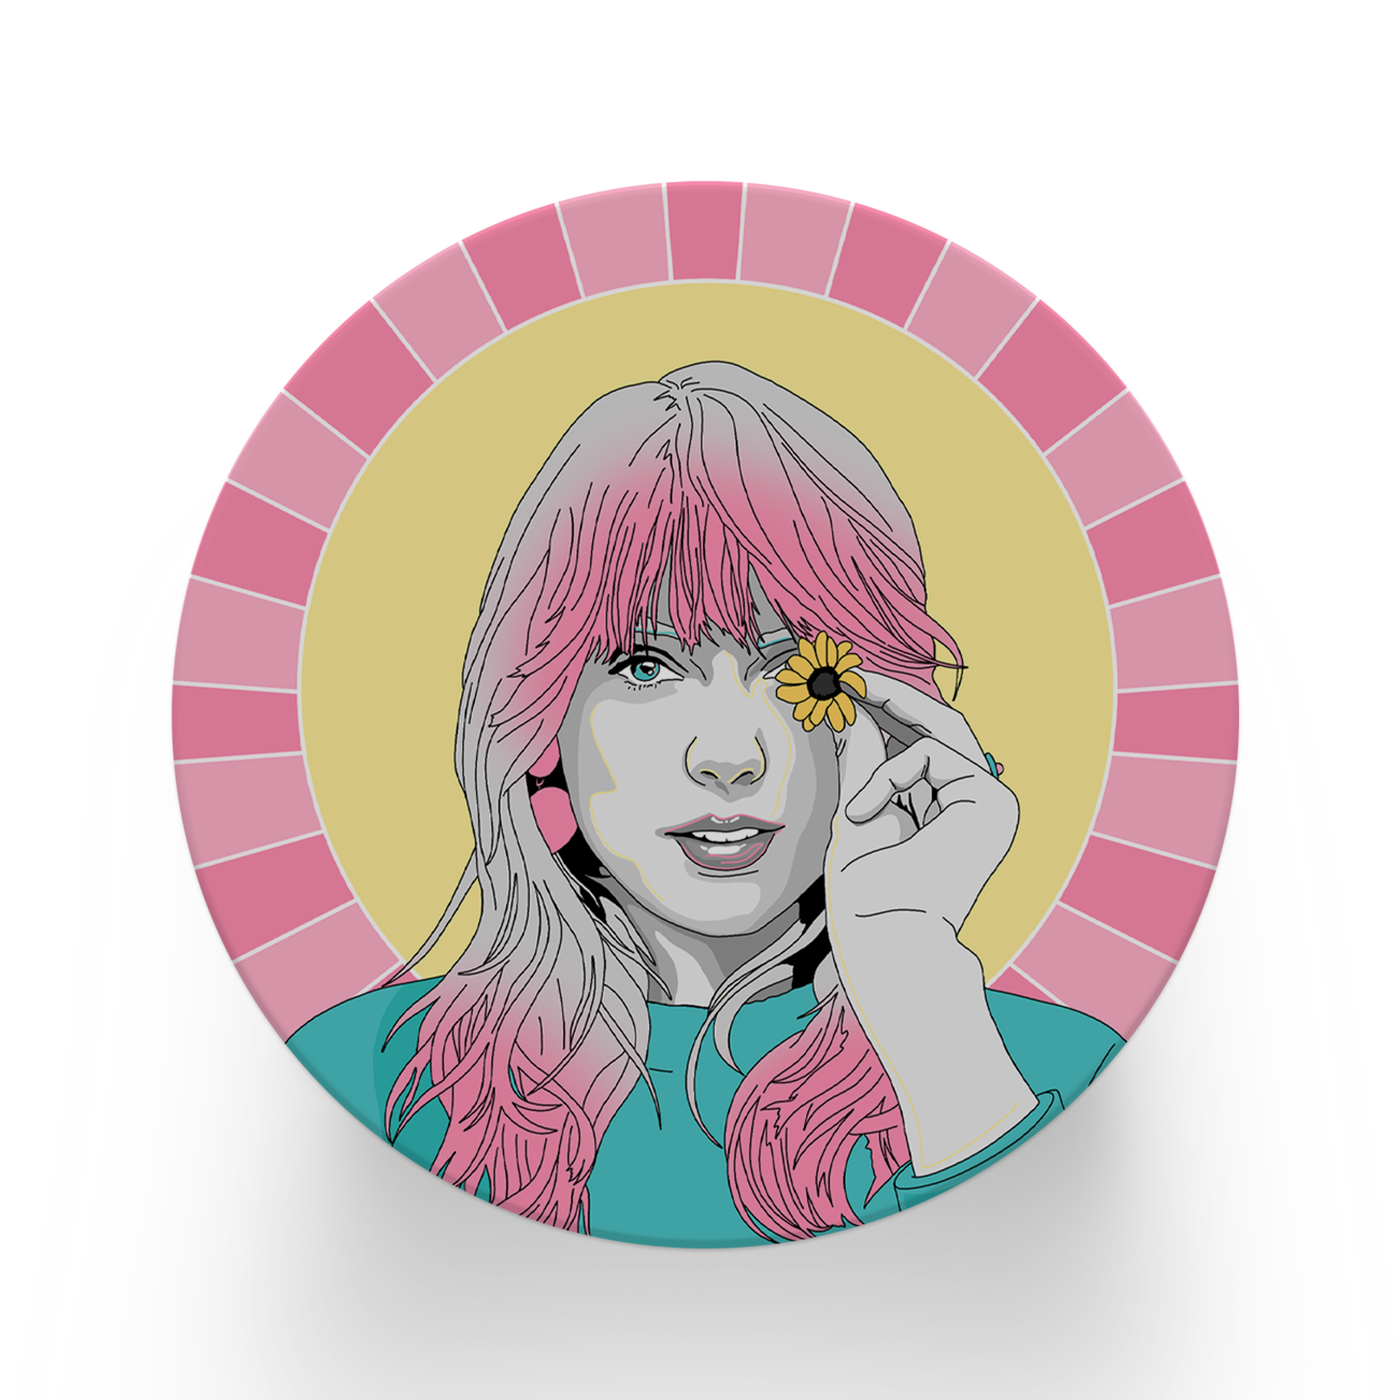 Taylor Swift Portrait Coaster